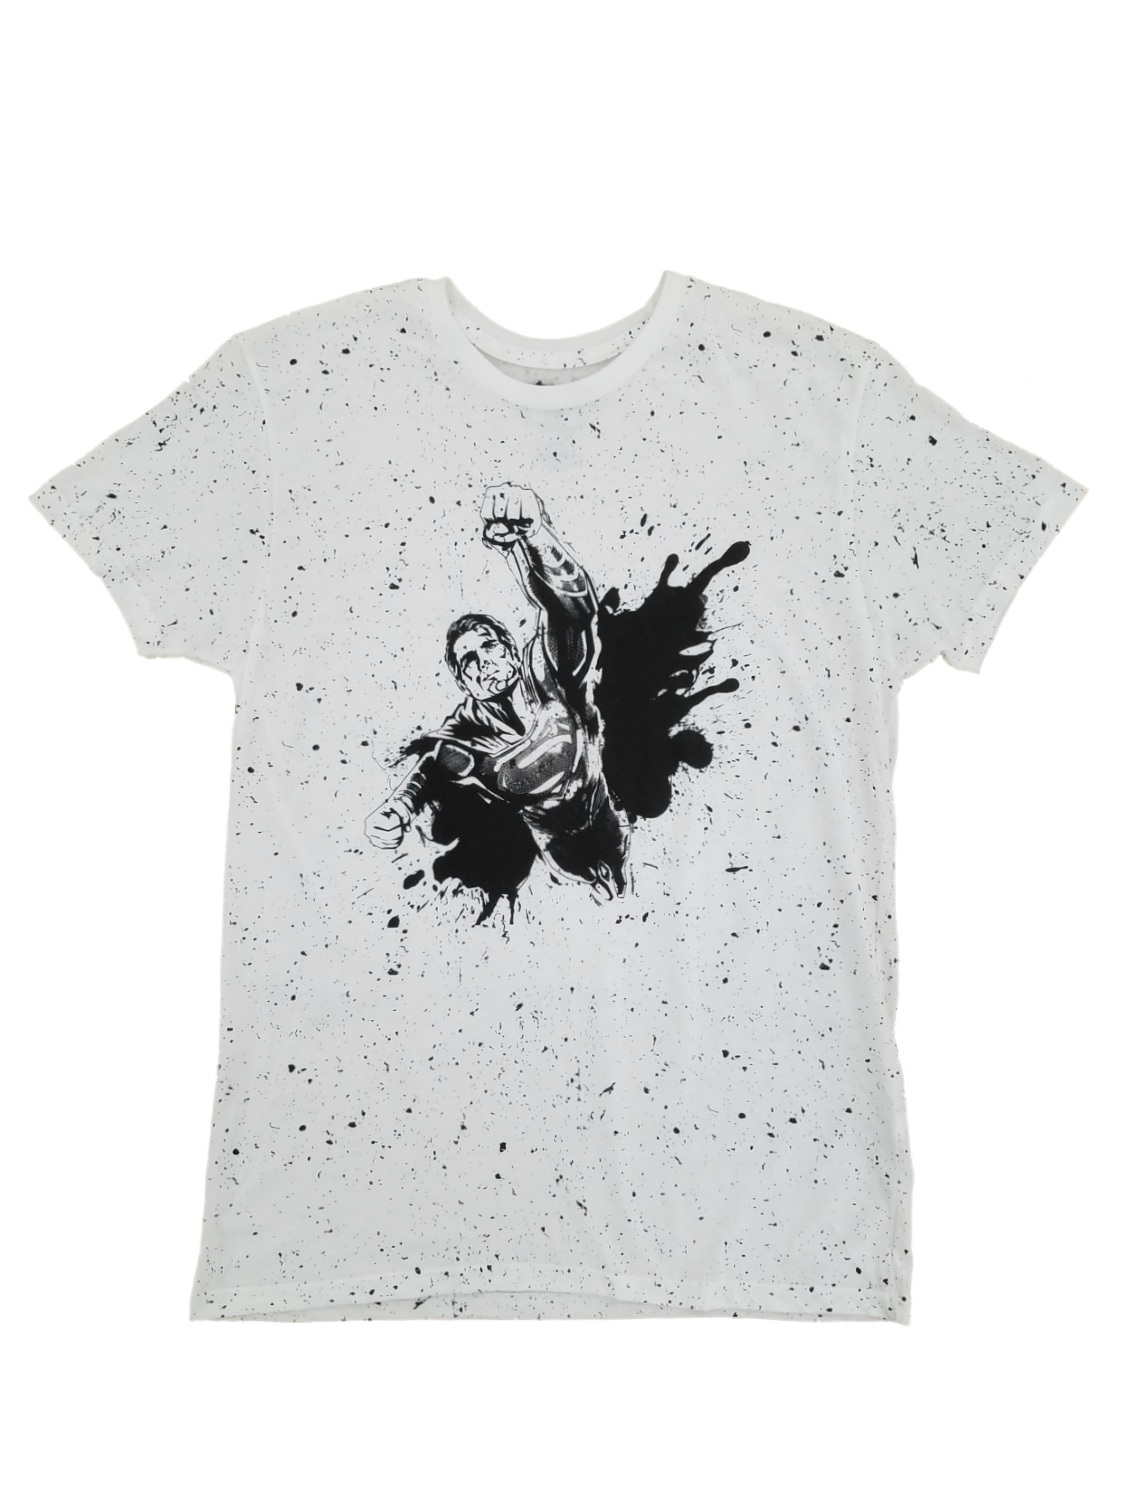 Batman V Superman DC Comics Mens White Splatter Graphic Tee T-Shirt L - image 1 of 1